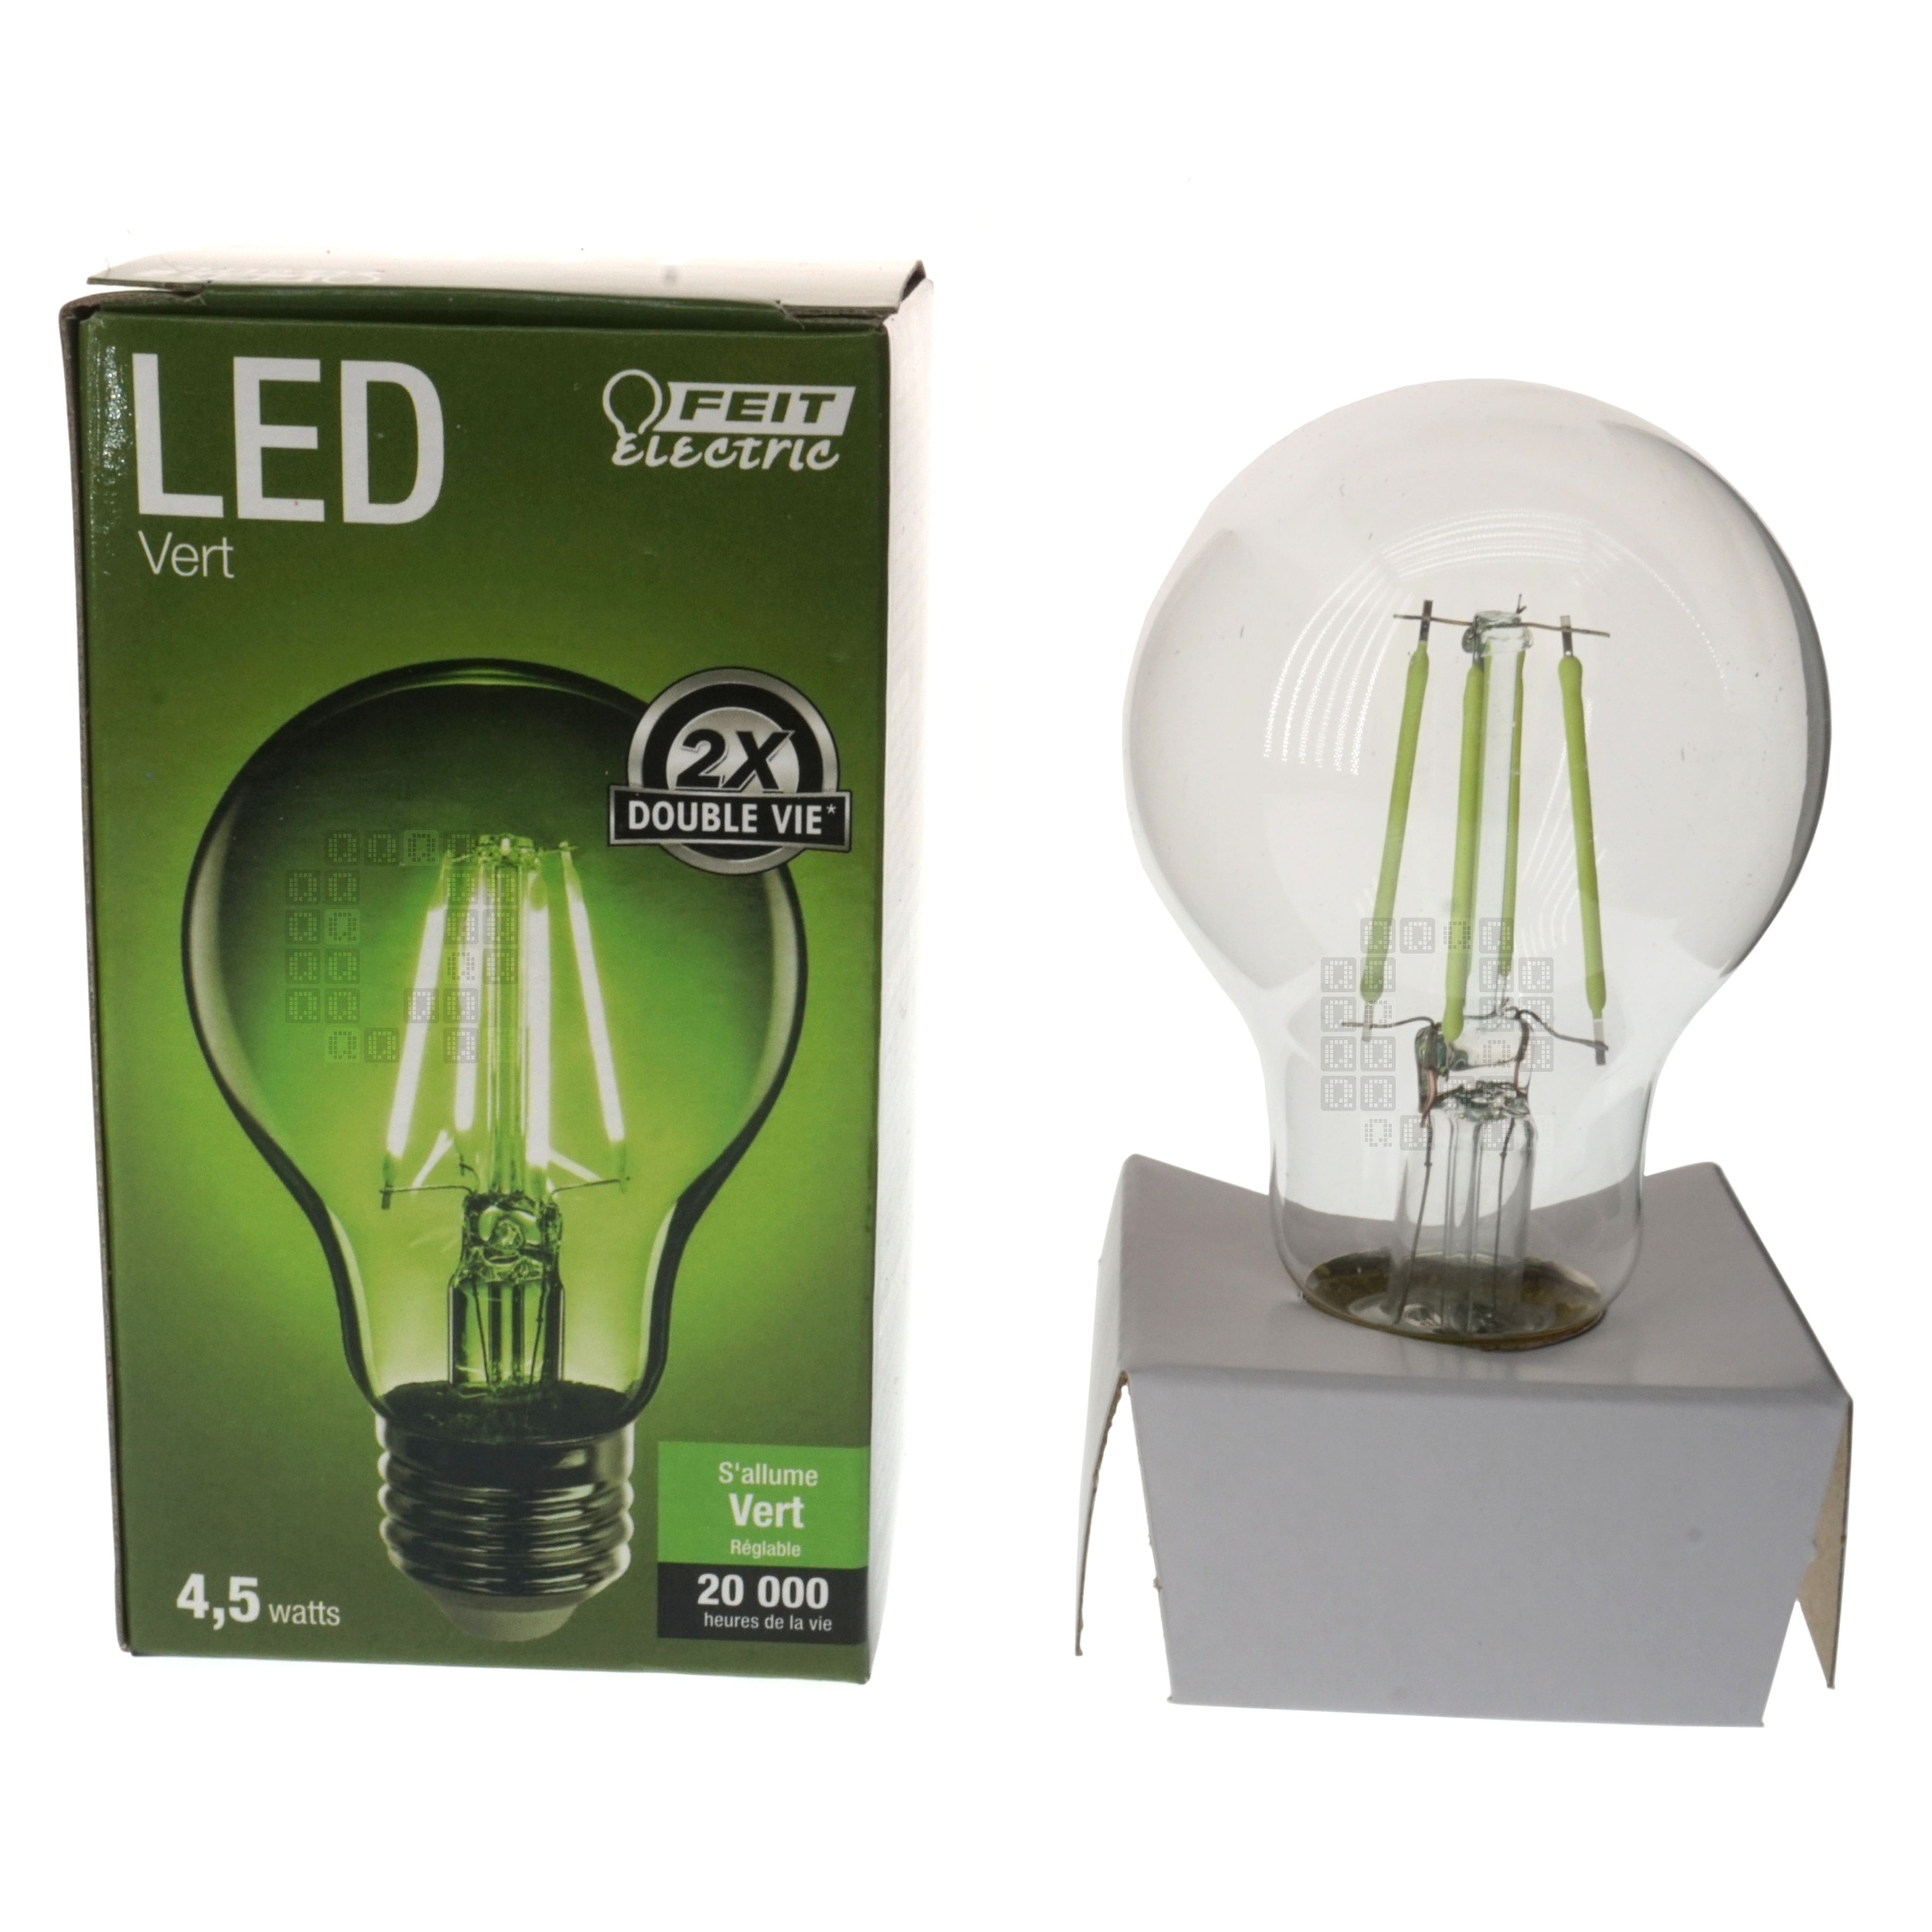 Feit Electric A19/TG/LED Green Filament LED Light Bulb, 4.5 Watt, 120V E26, Dimmable, 20,000hr